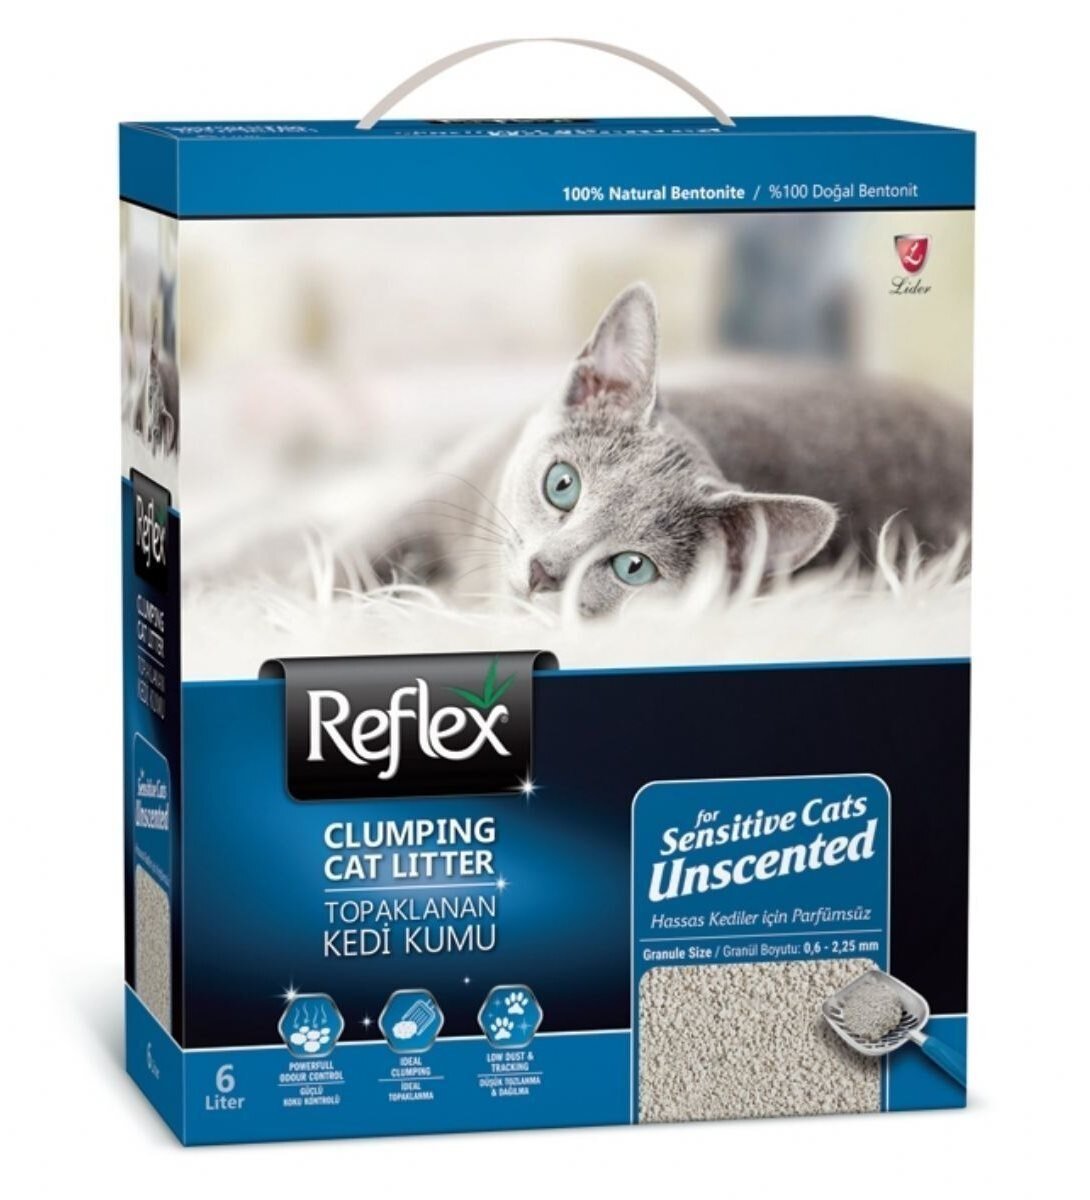 Reflex Hassas Kediler için Parfümsüz Topaklaşan Bentonit Kedi Kumu 6 L